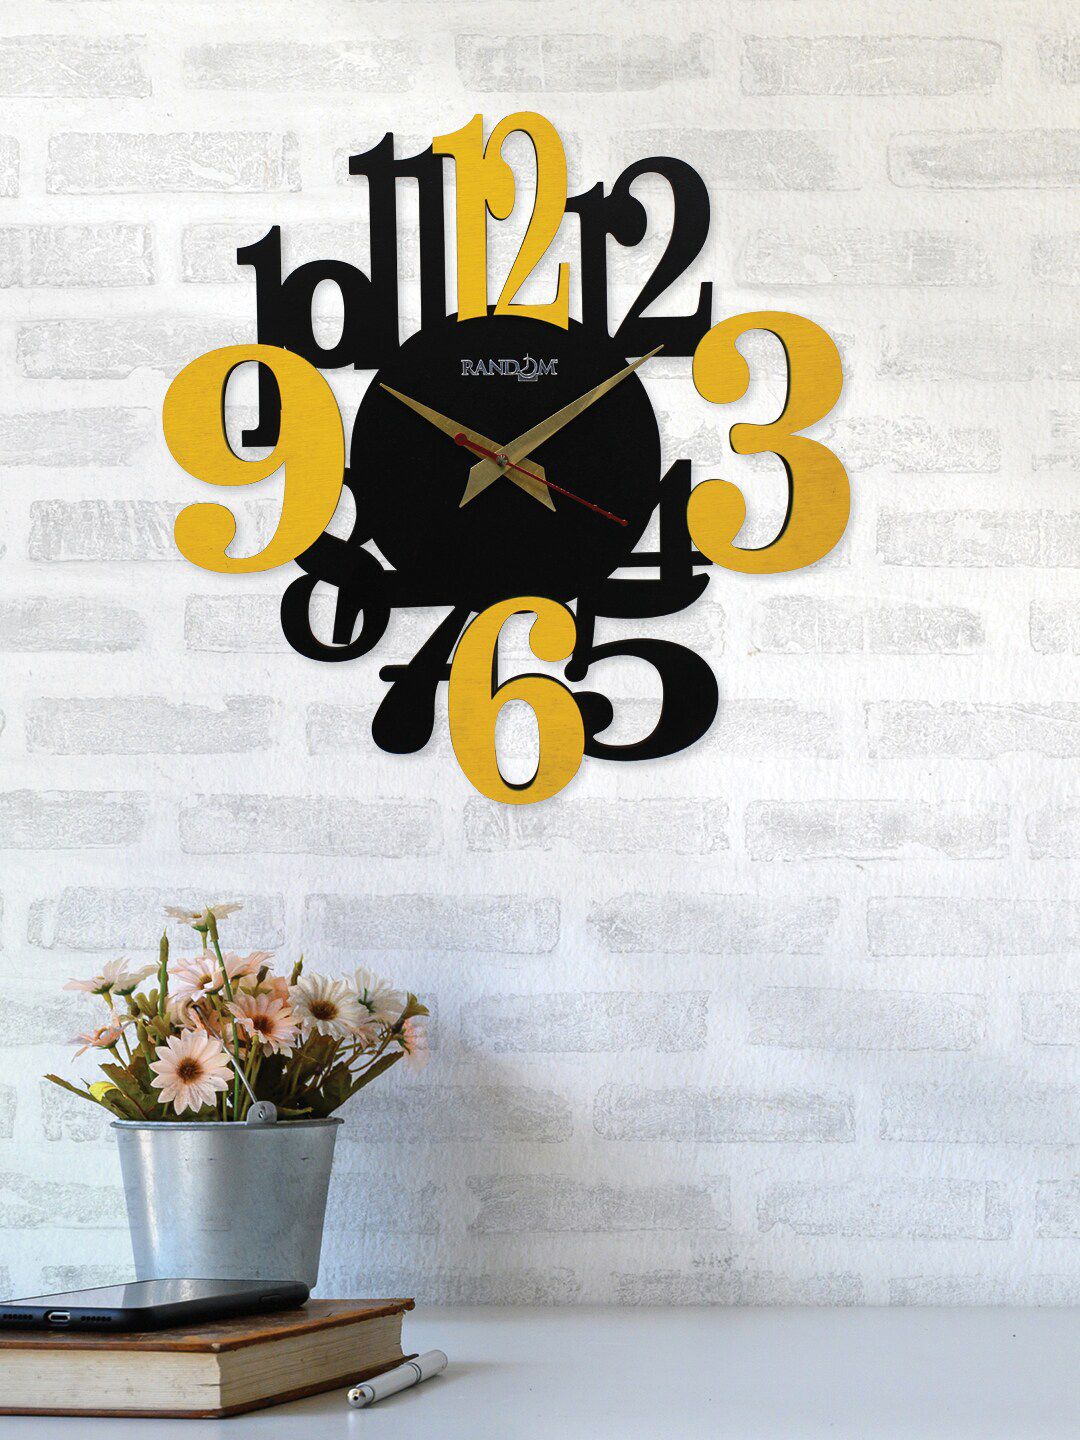 RANDOM Black & Yellow Round Printed 30.49 cm Analogue Wall Clock Price in India